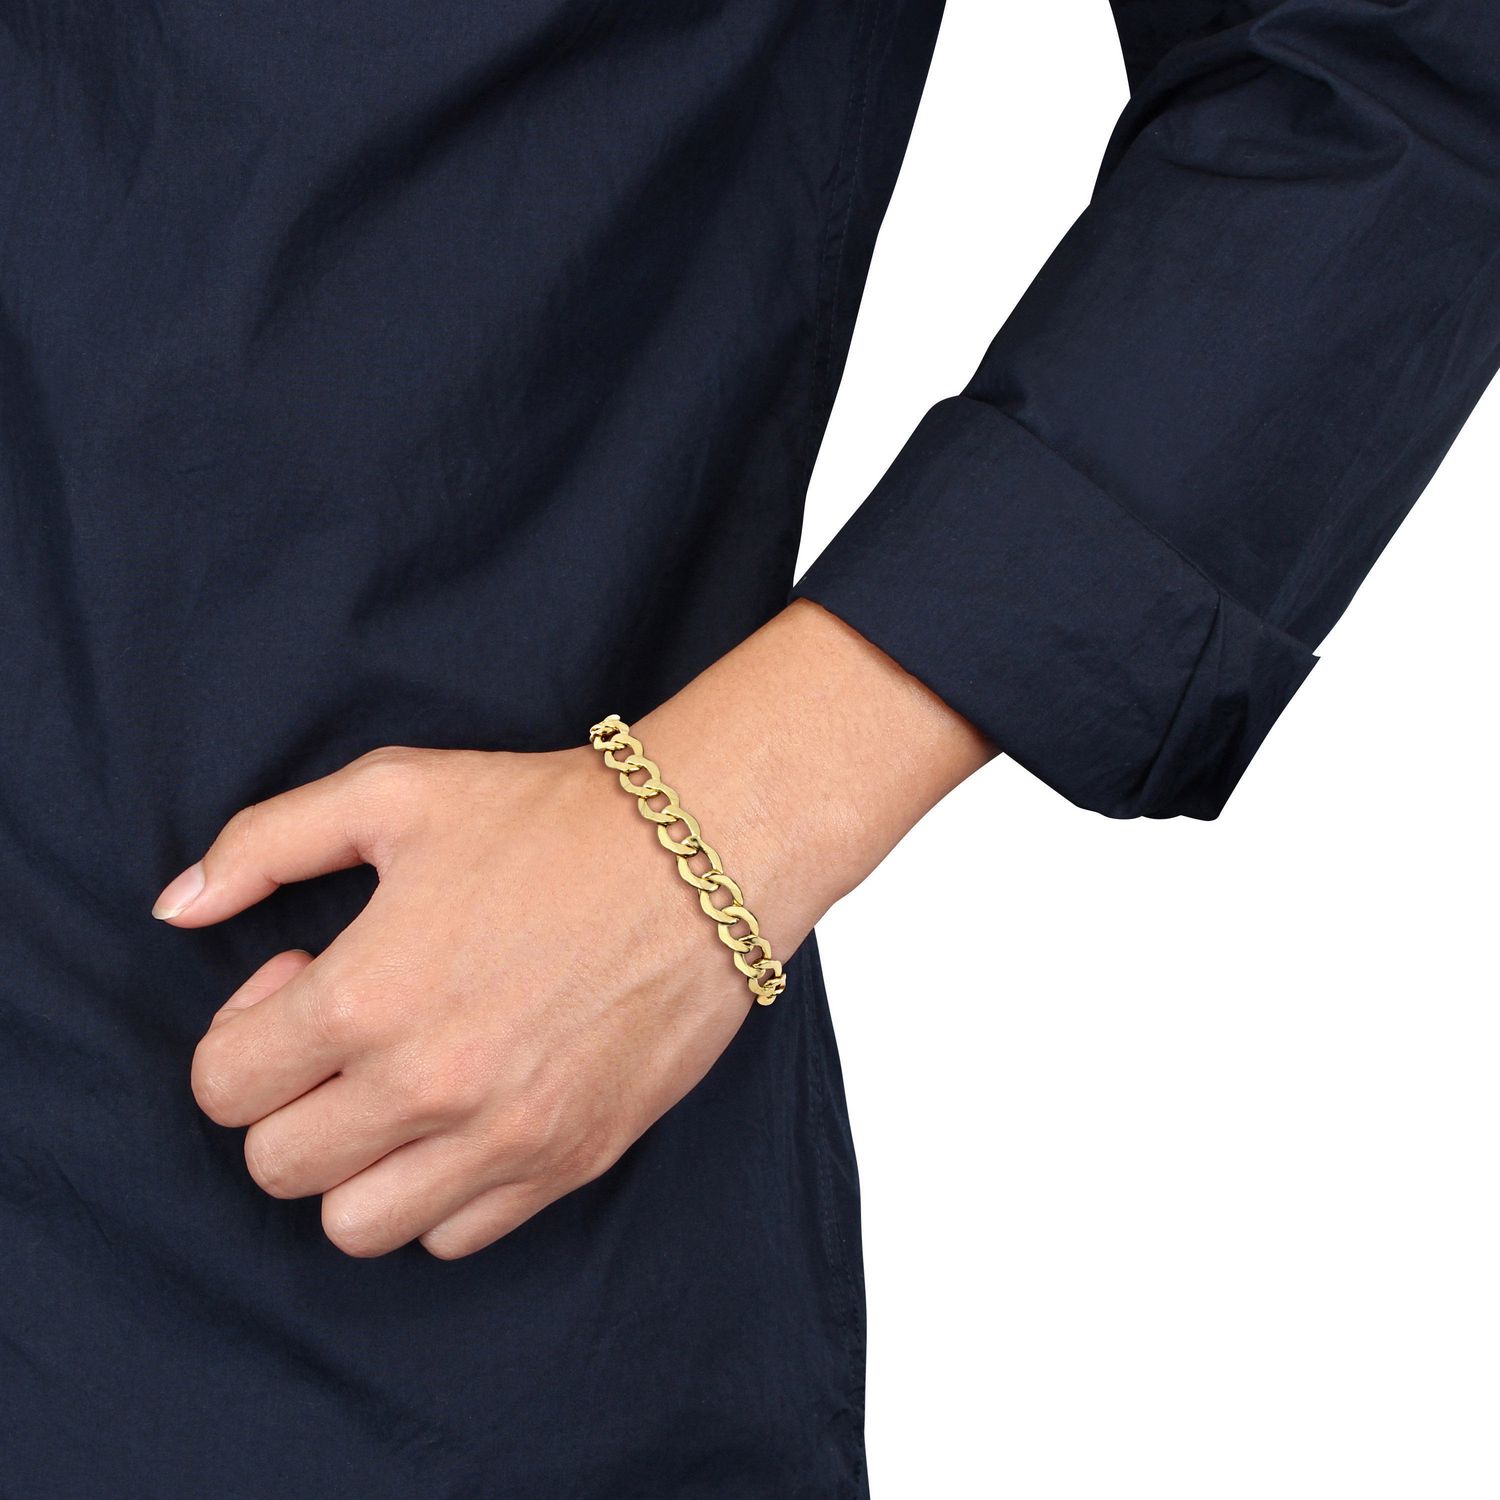 Asteria Men's 10 K Yellow Gold Curb Link Bracelet, 9